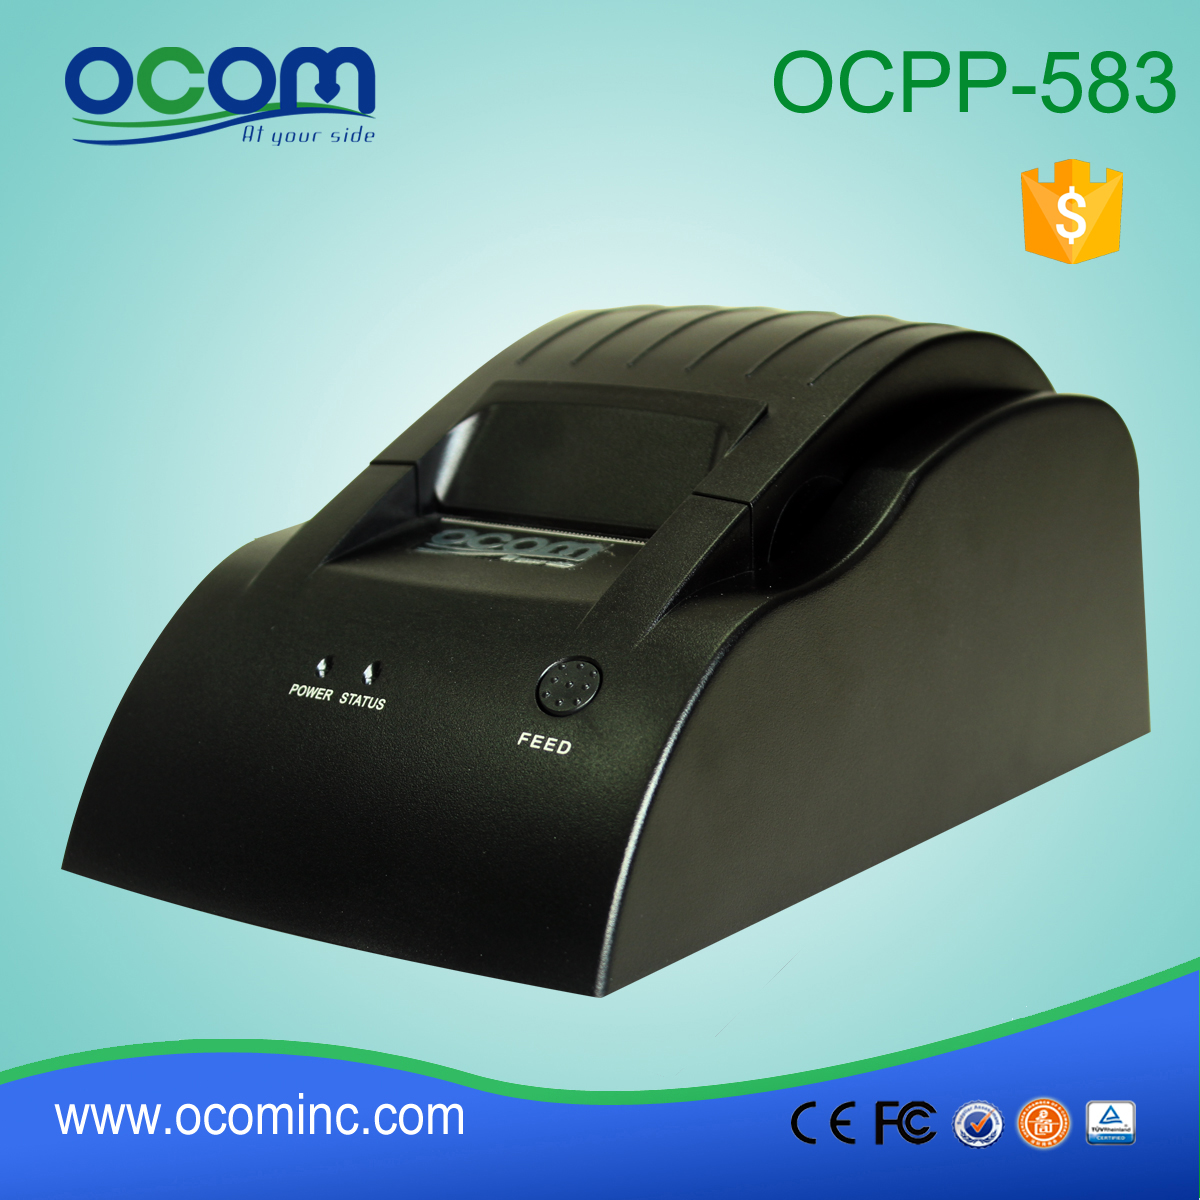 OCPP-583-R 58 mm POS Thermal Ticket Receipt Printer RS232 Port